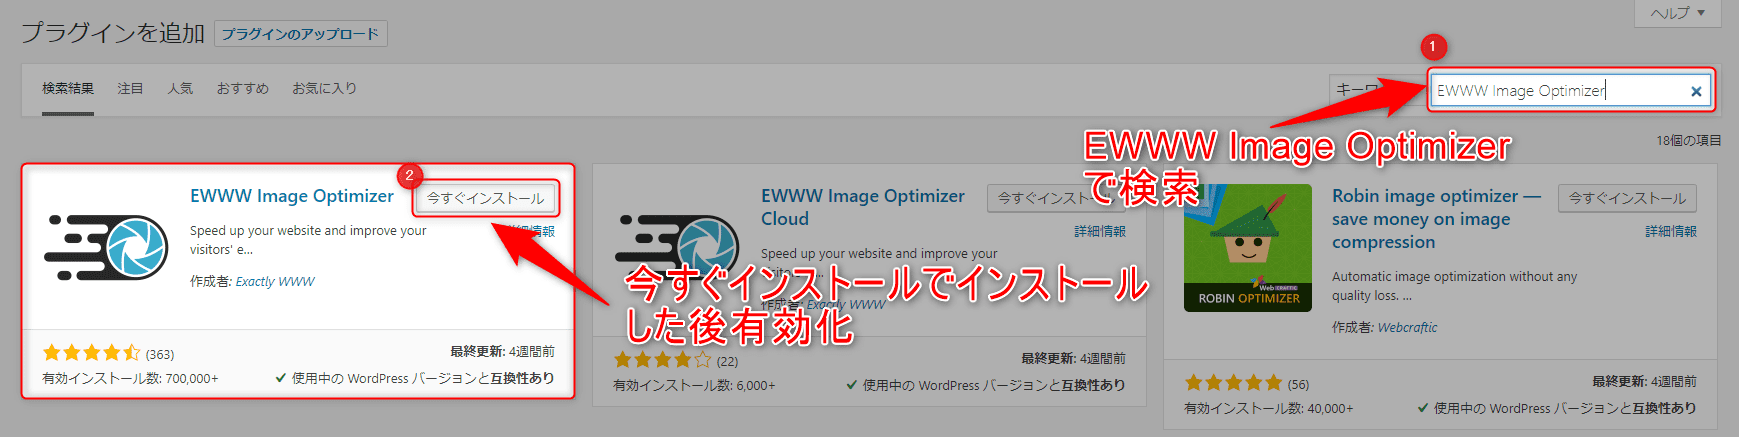 EWWW Image Optimizer - インストール